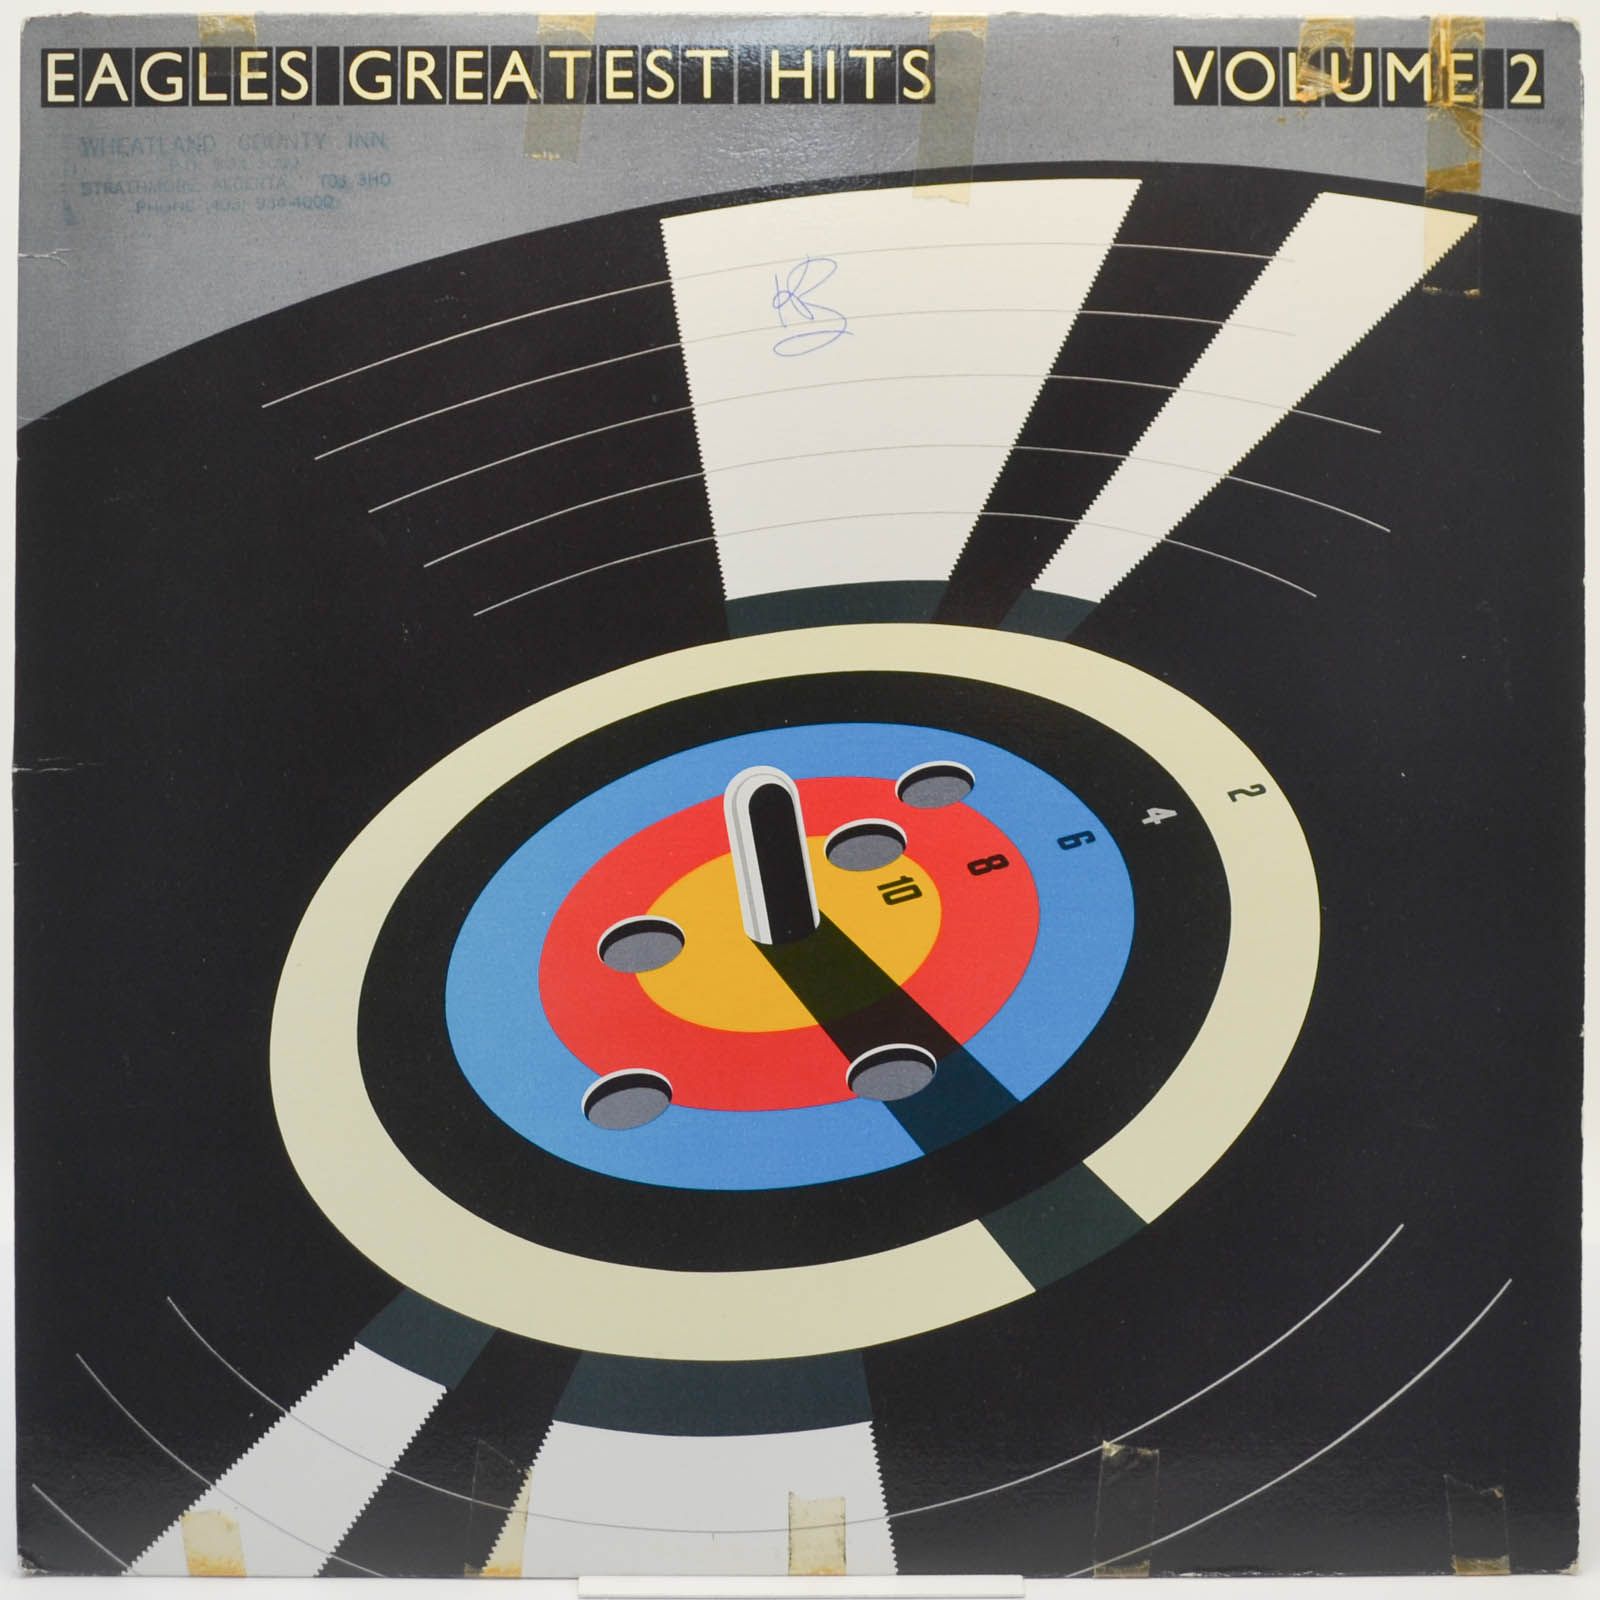 Eagles — Eagles Greatest Hits Volume 2, 1982